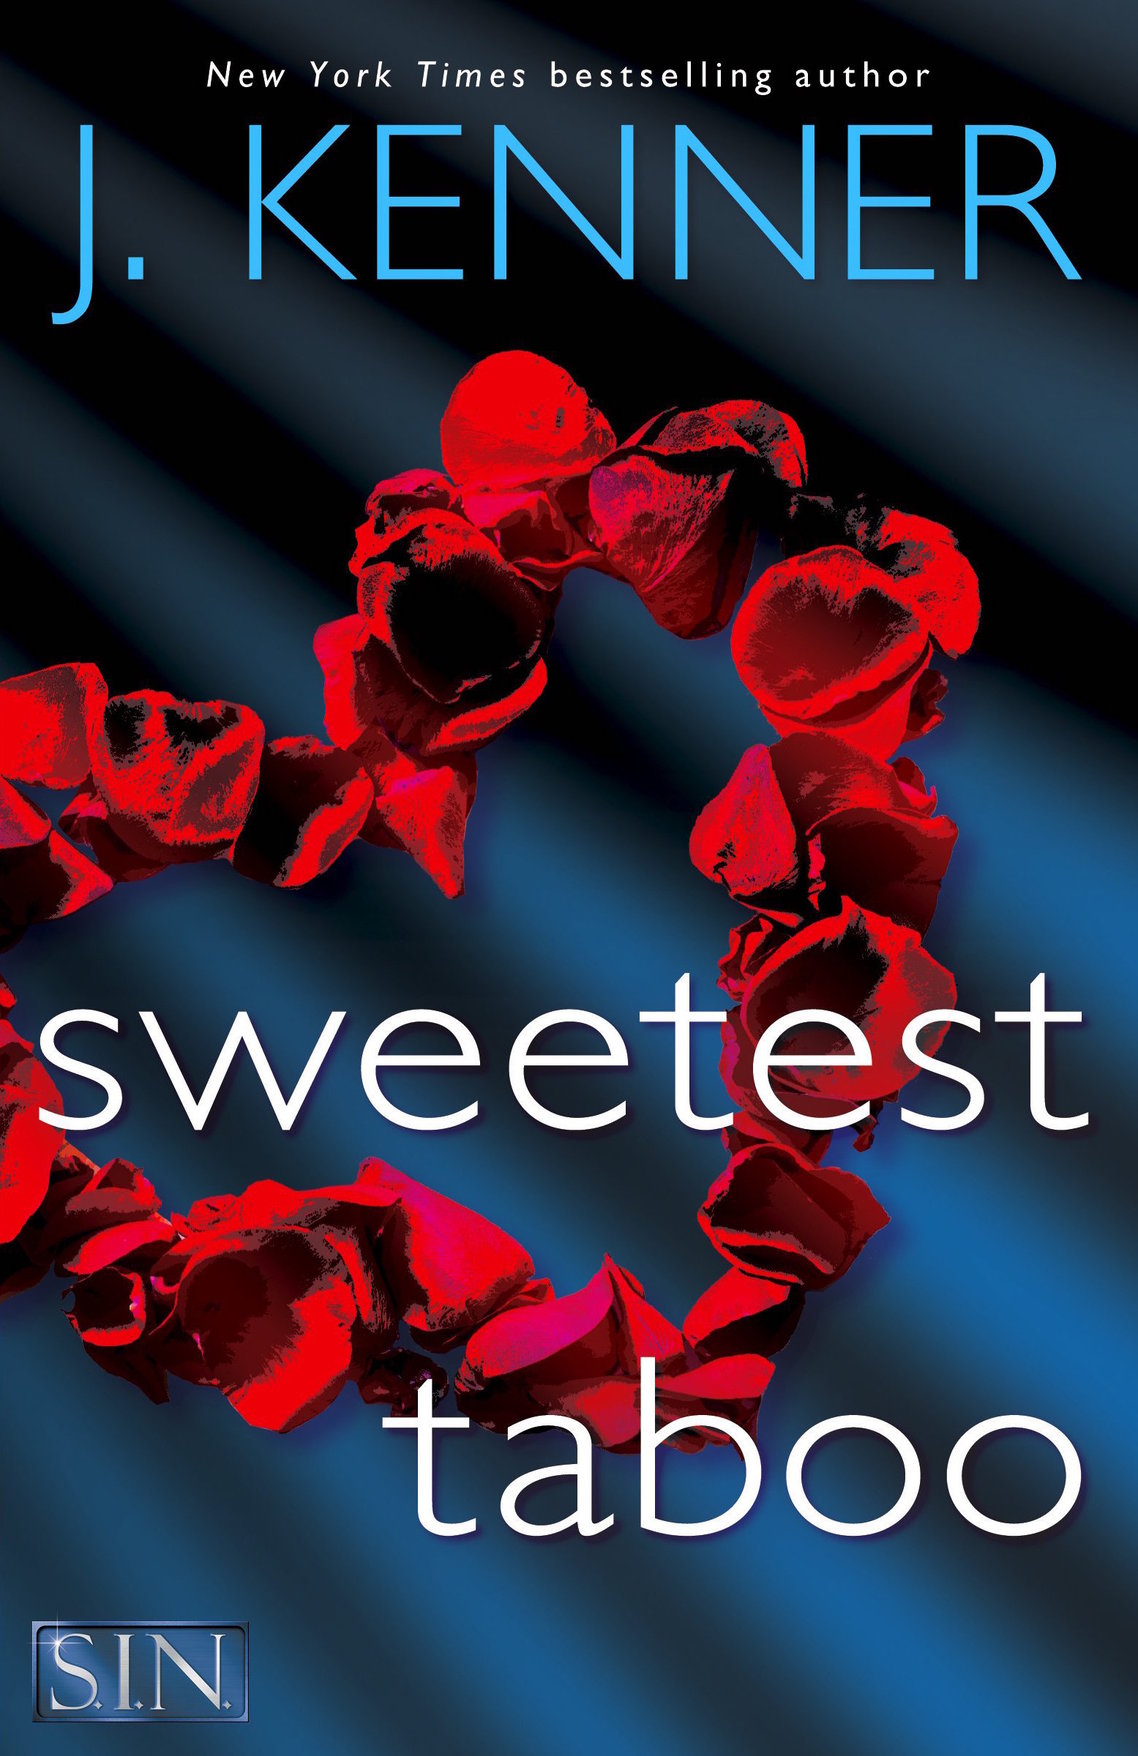 Sweetest Taboo (2016) by J. Kenner